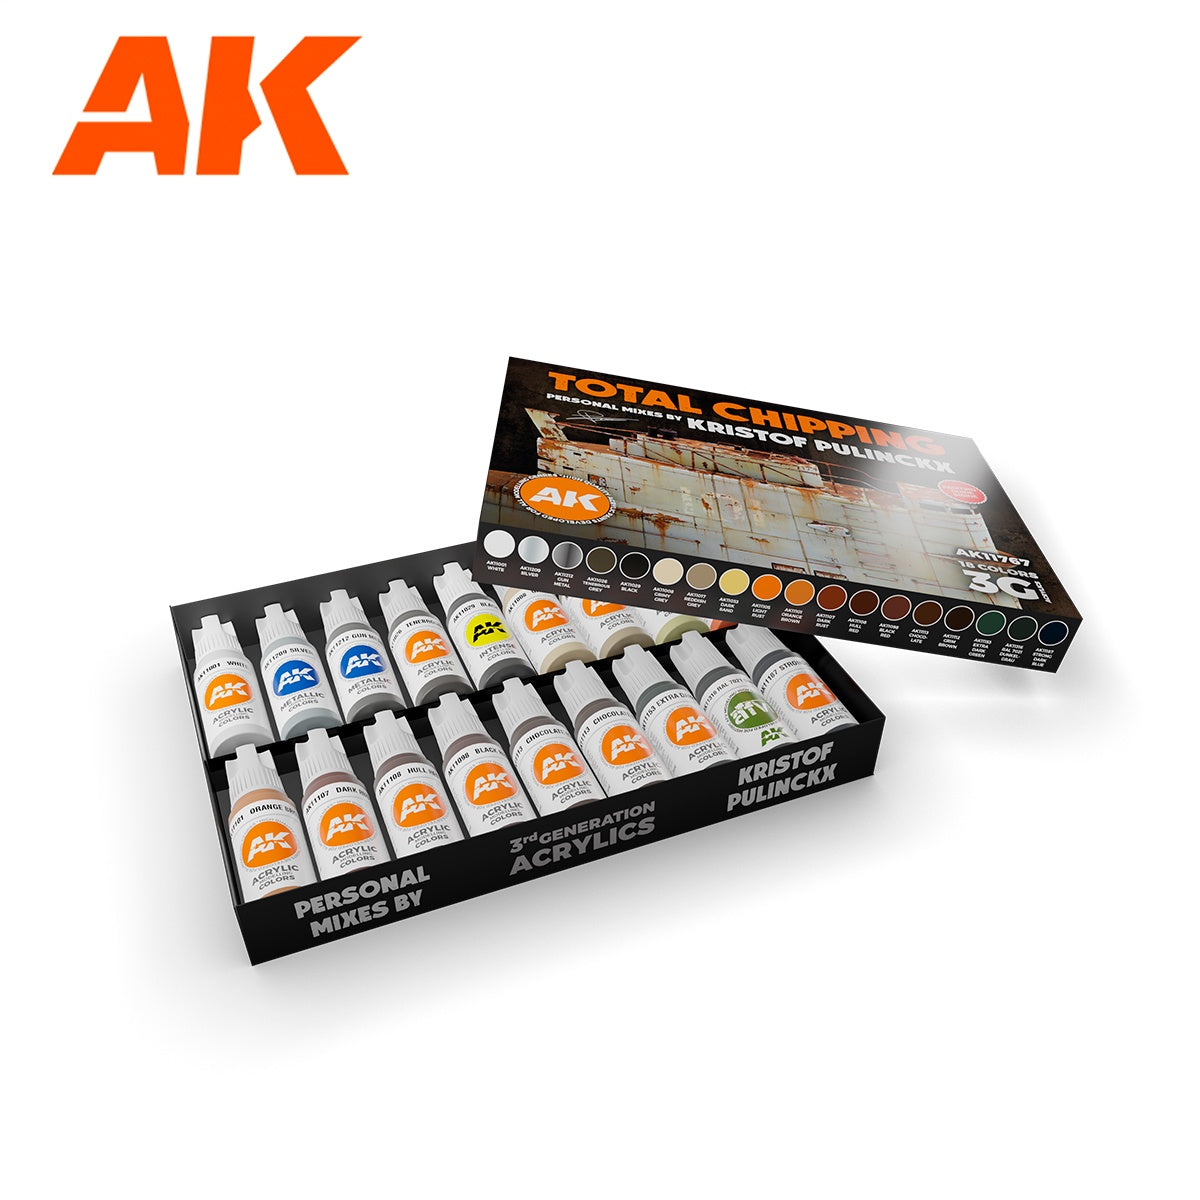 AK Interactive Signature Set – Total Chipping – Kristof Pulinckx Set